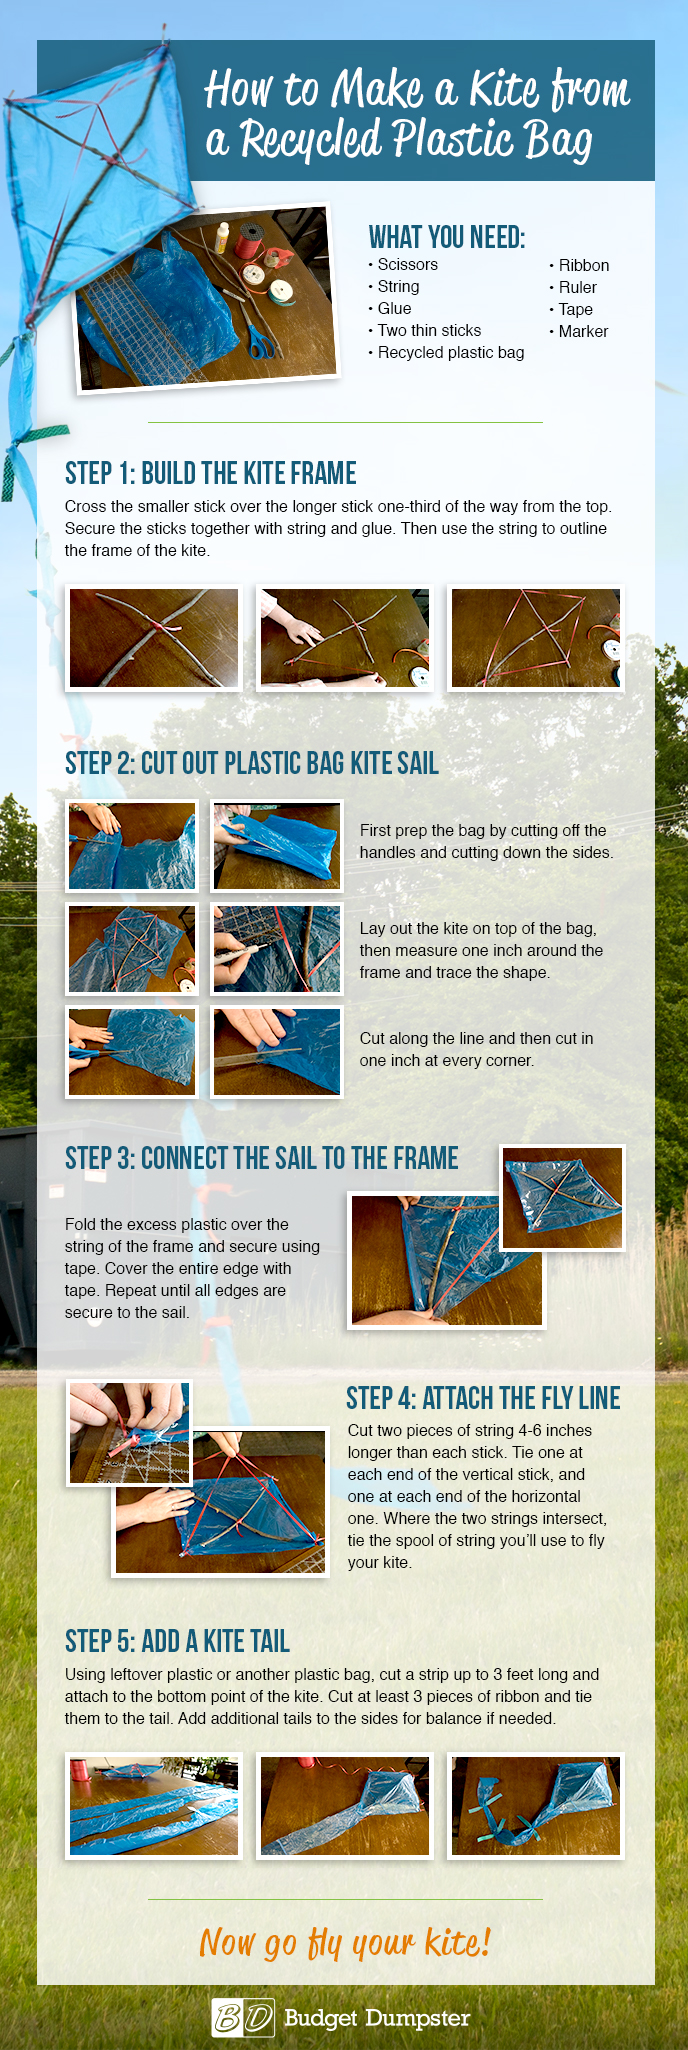 Plastic Bag Kite Infographic 